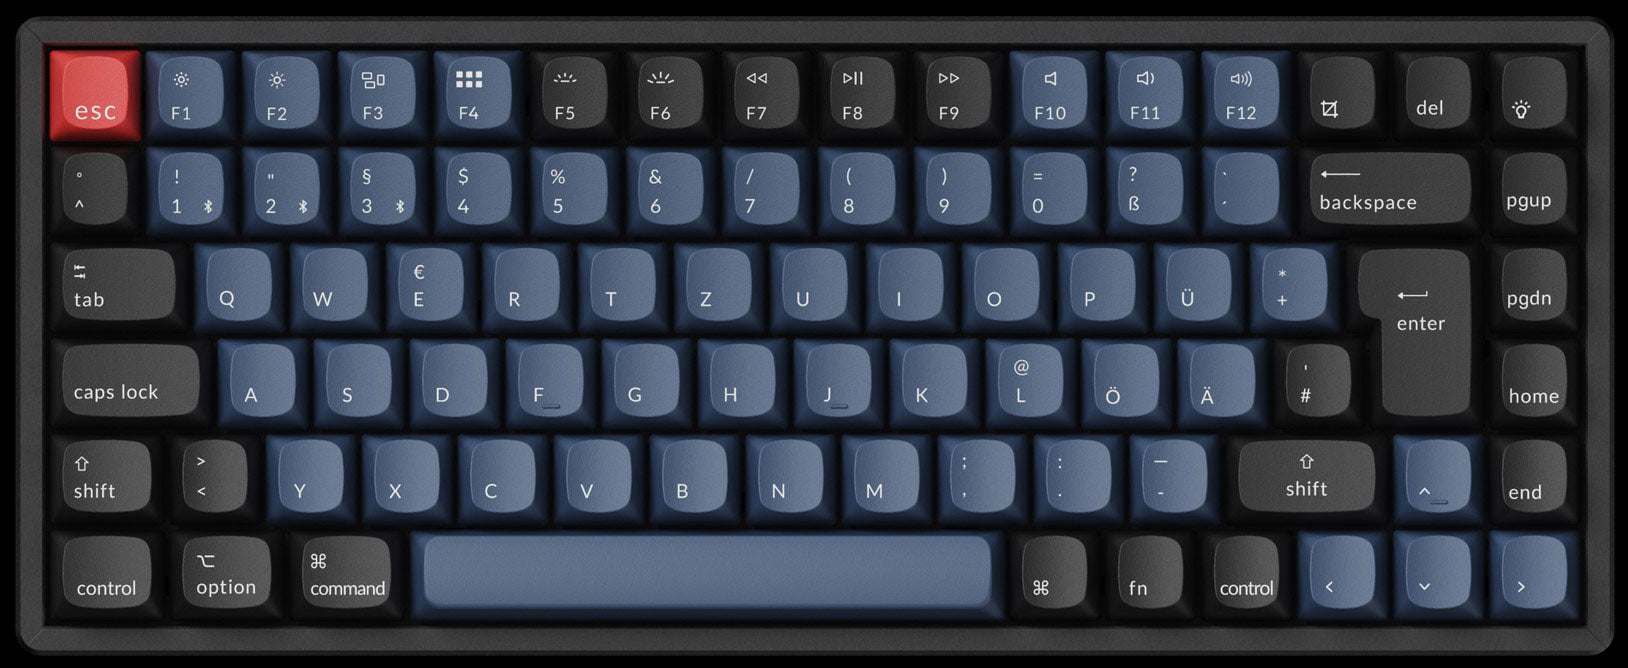 K2 Pro ISO 123 كيكرون K2 برو، لوحة مفاتيح للألعاب لوحة المفاتيح الميكانيكية اللاسلكية Keychron K2 Pro QMK / VIA - أزرق سويتش